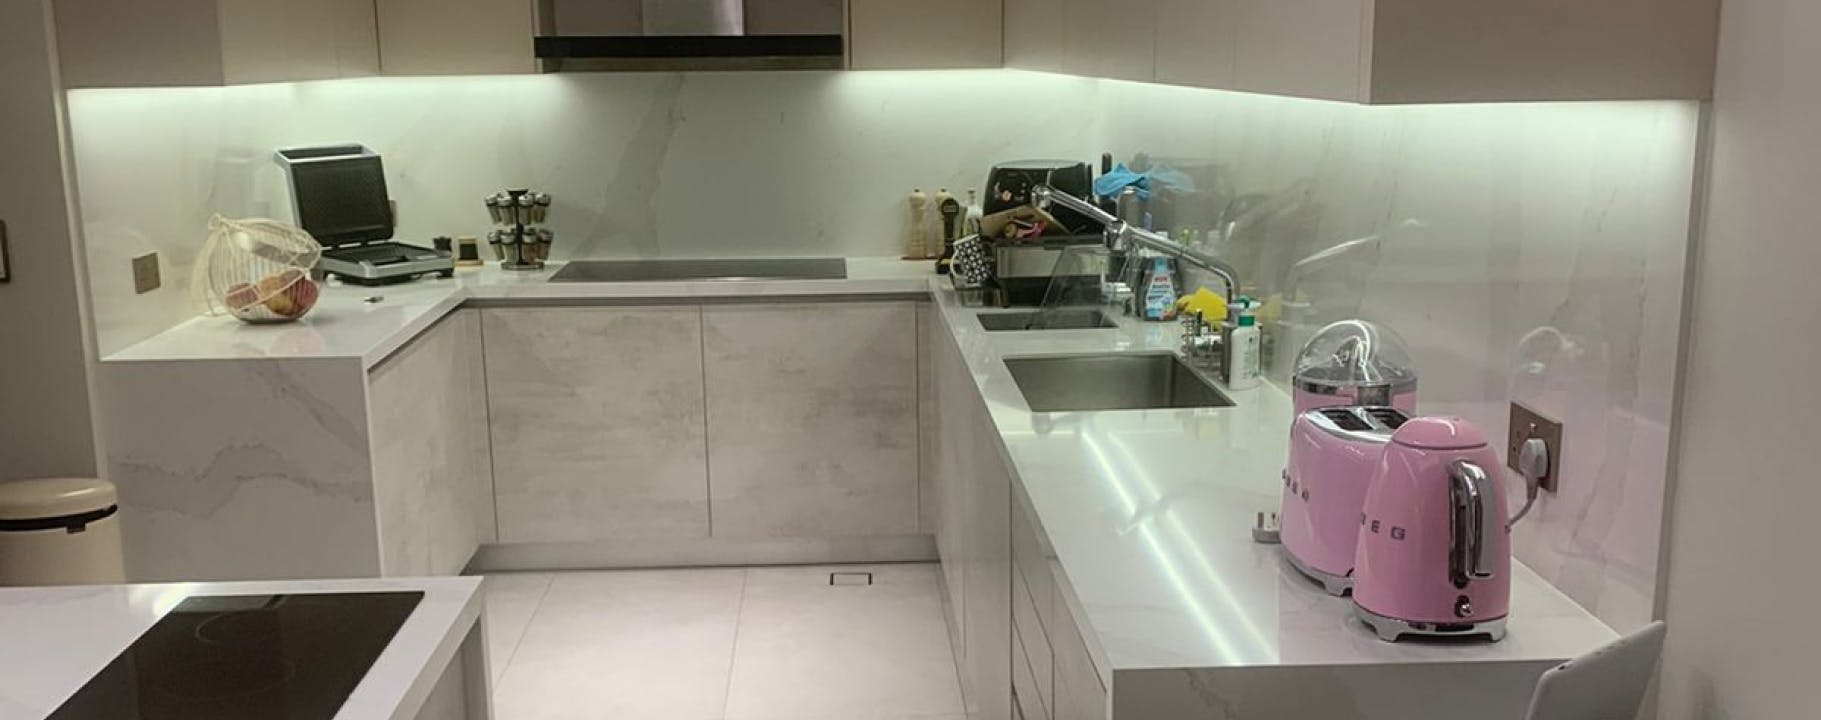 kitchen image modern design white style with lights and elegant design